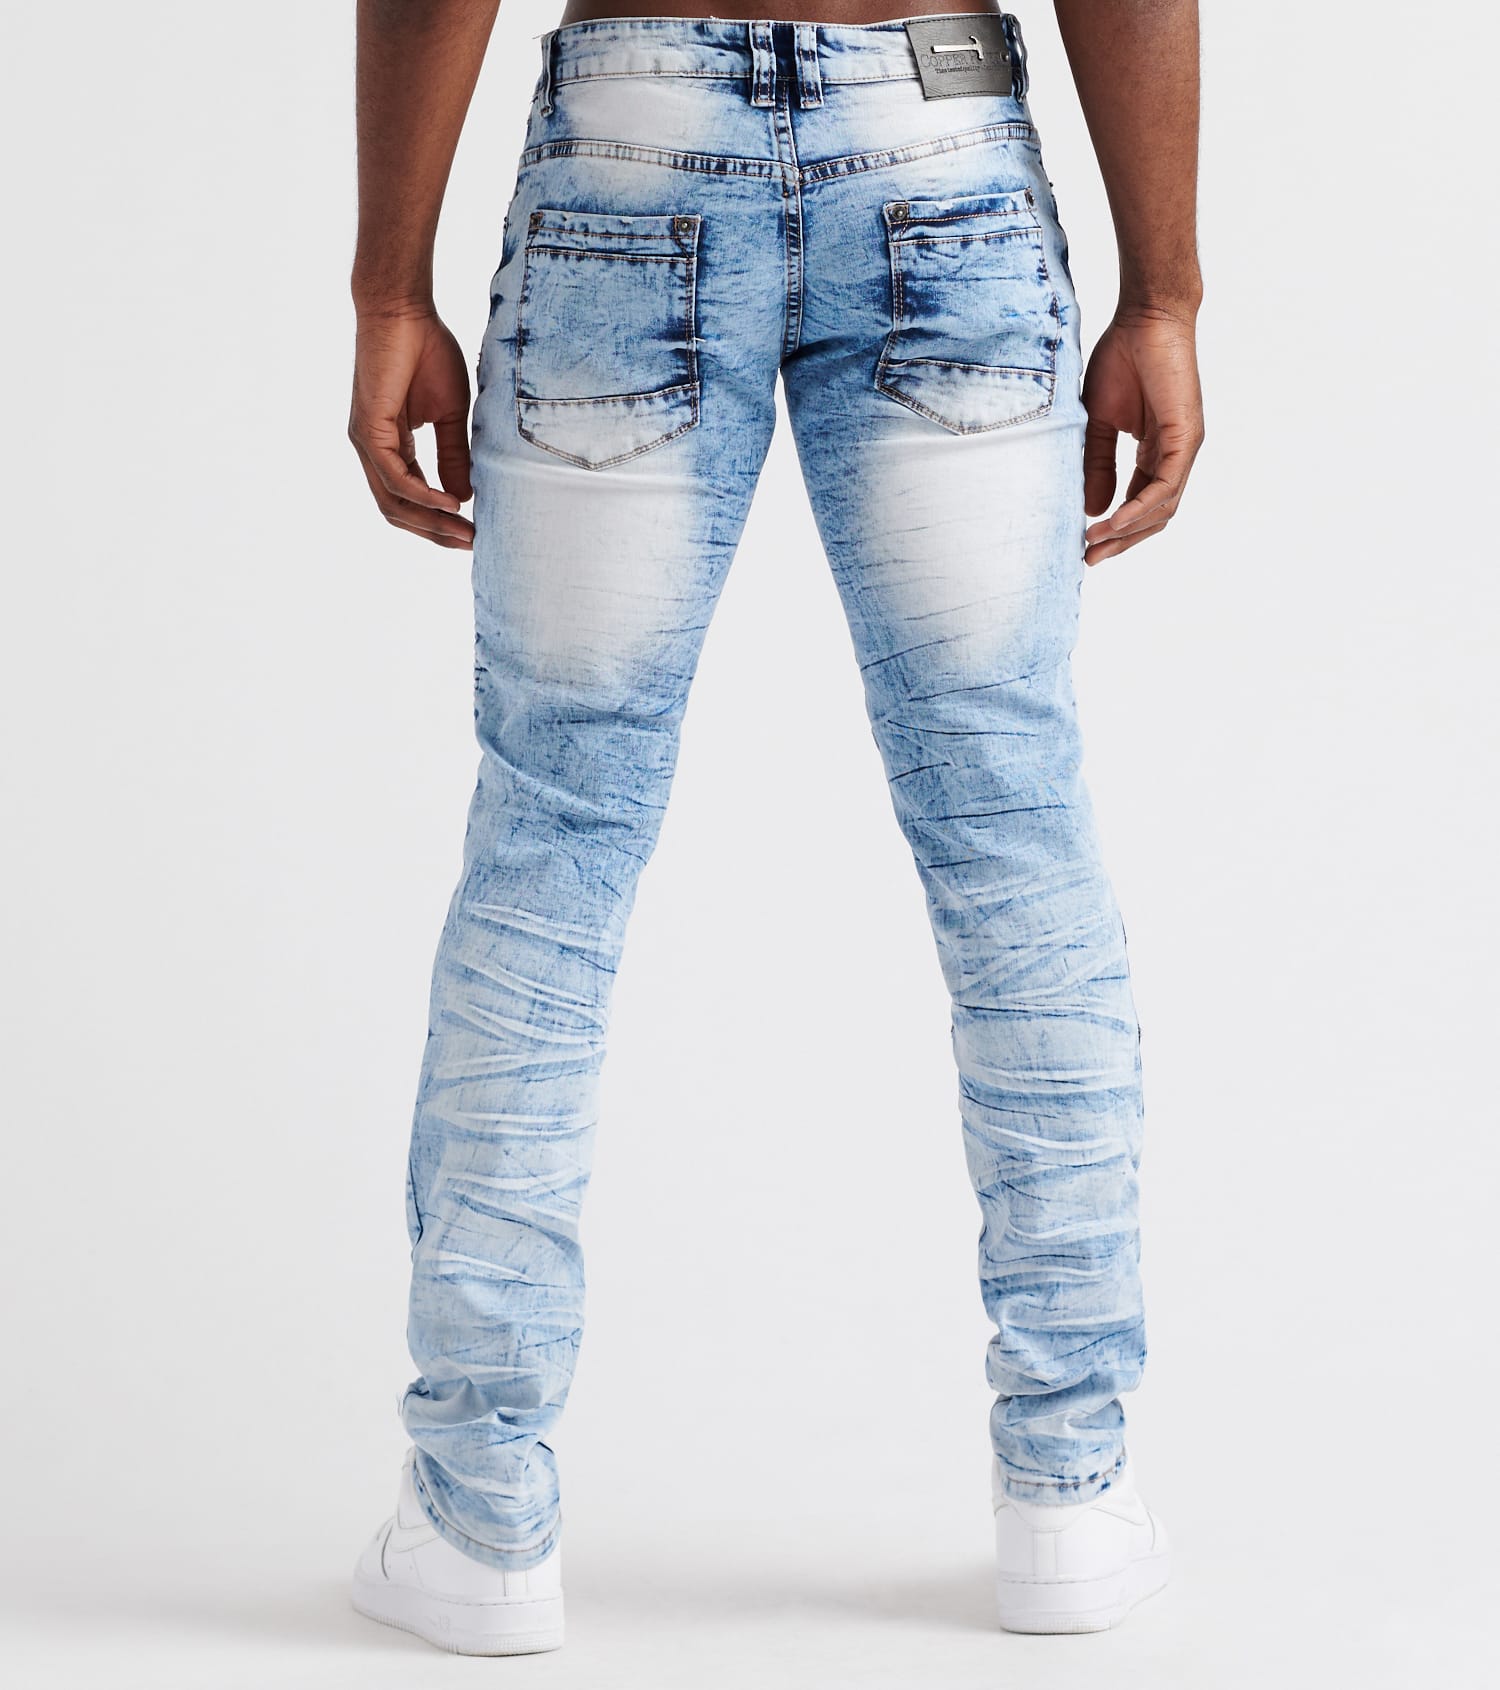 Decibel Silicon Embossed Jeans (Medium Blue) - 833015-LSB | Jimmy Jazz